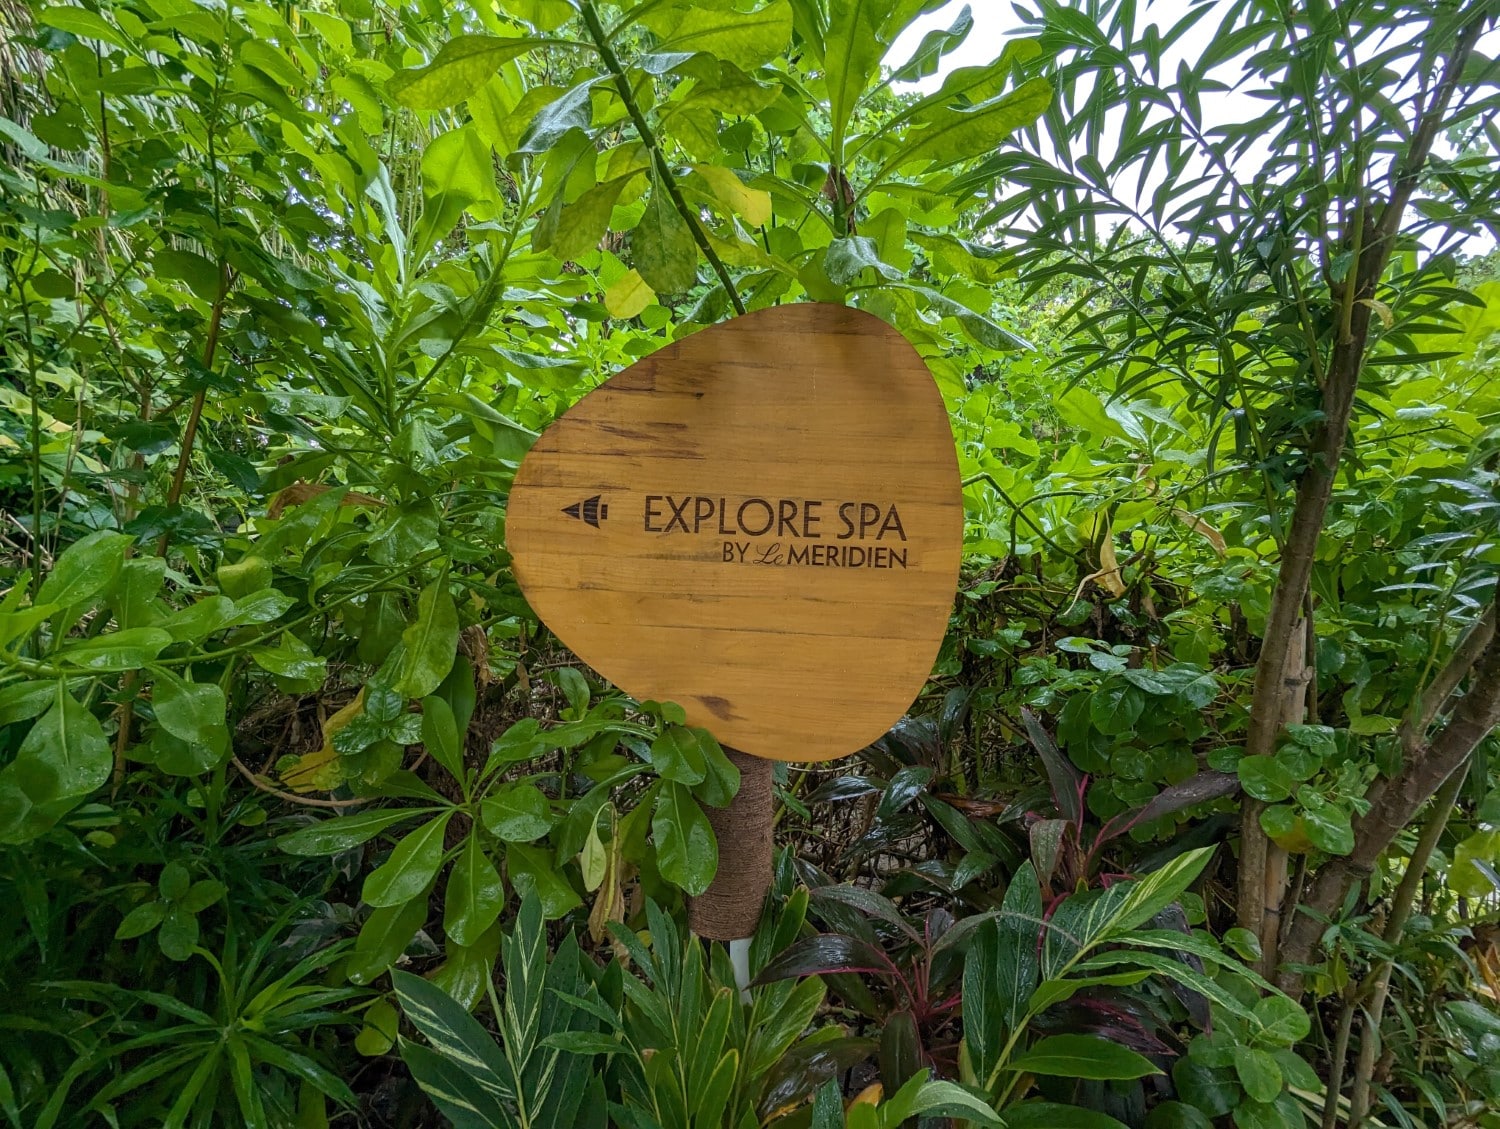 le meridien maldives resort & spa explore spa sign